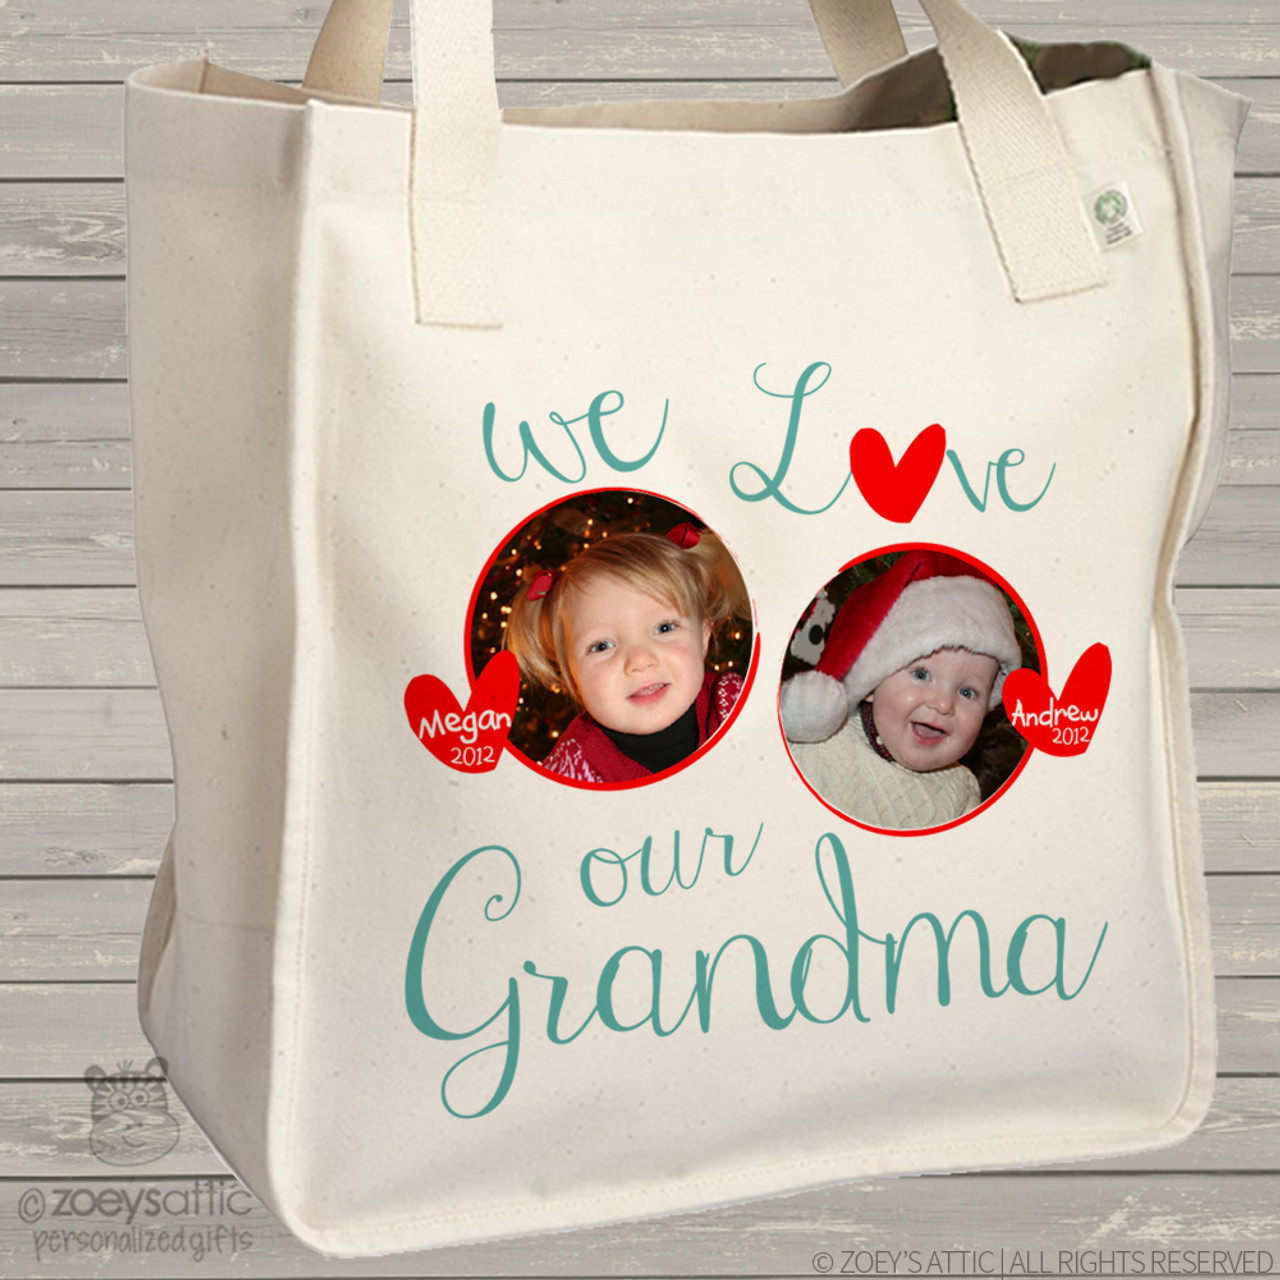 personalized womens tote bag, gift, grandma grandpa love, custom photo  canvas bag